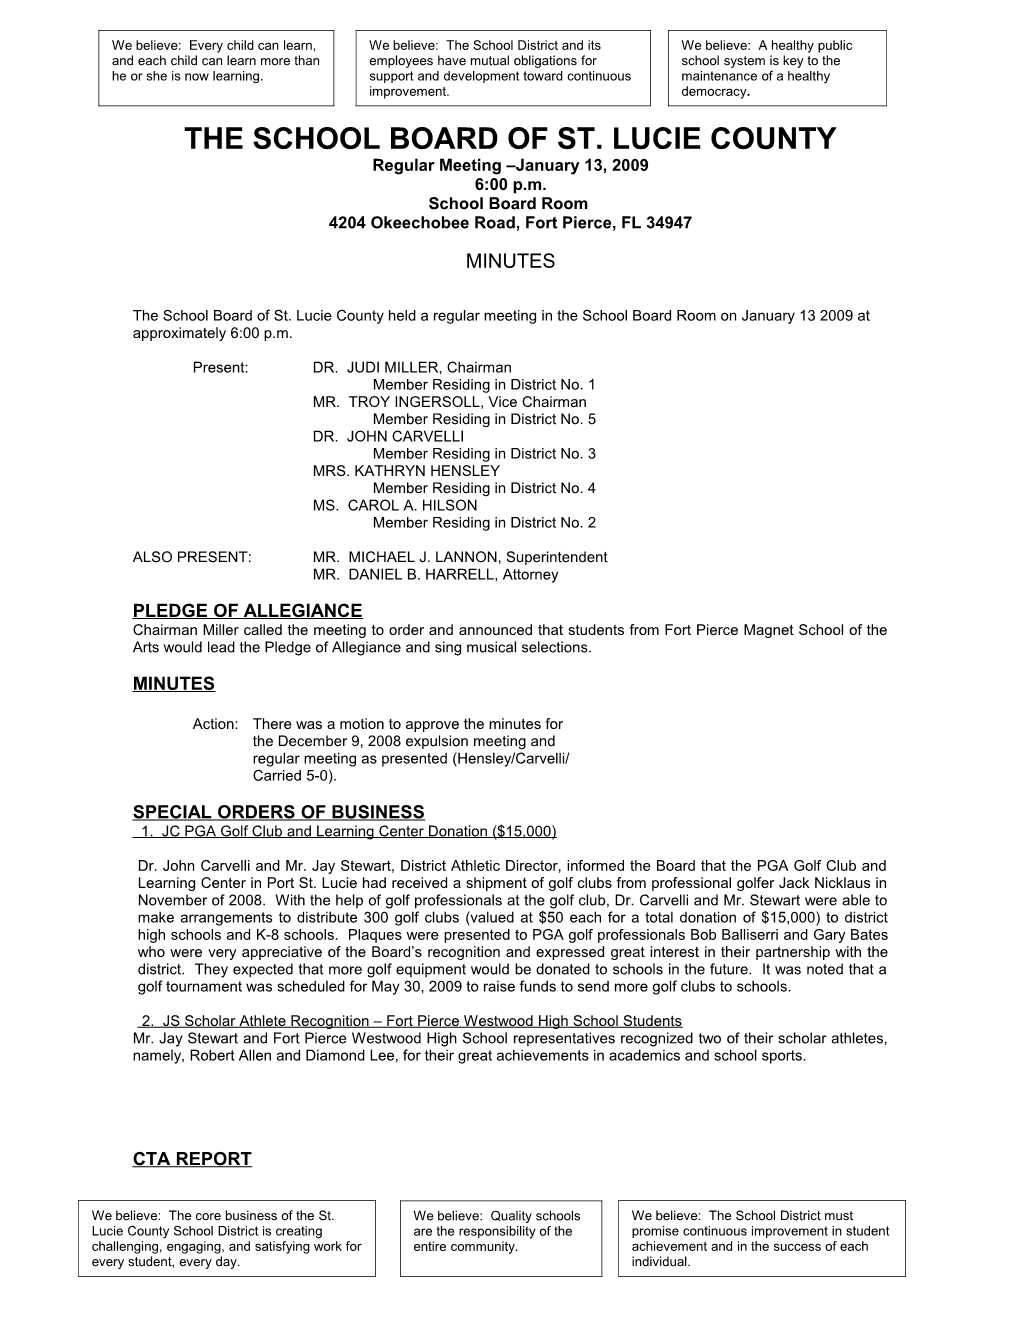 01-13-09 SLCSB Regular Meeting Minutes